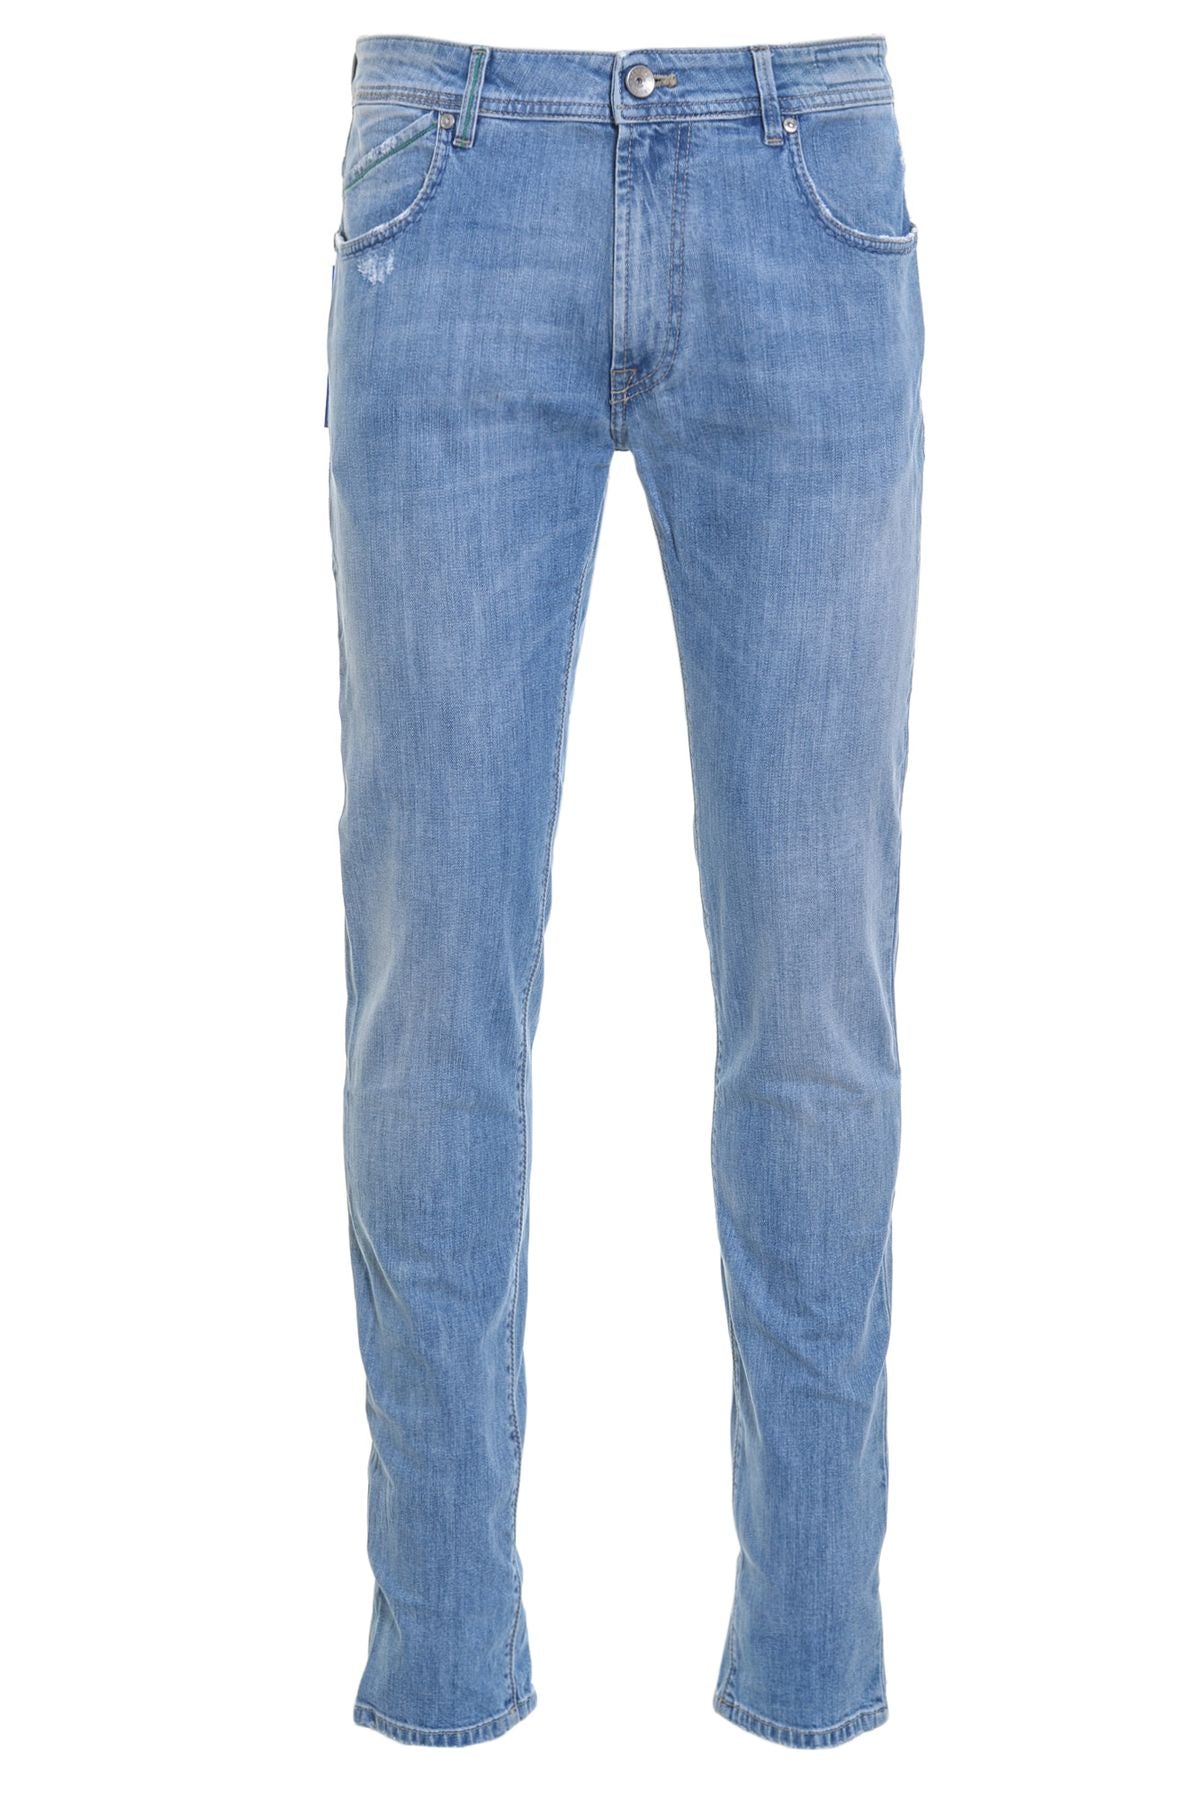 Re-HasH Jeans Autunno/Inverno p4002546hopper